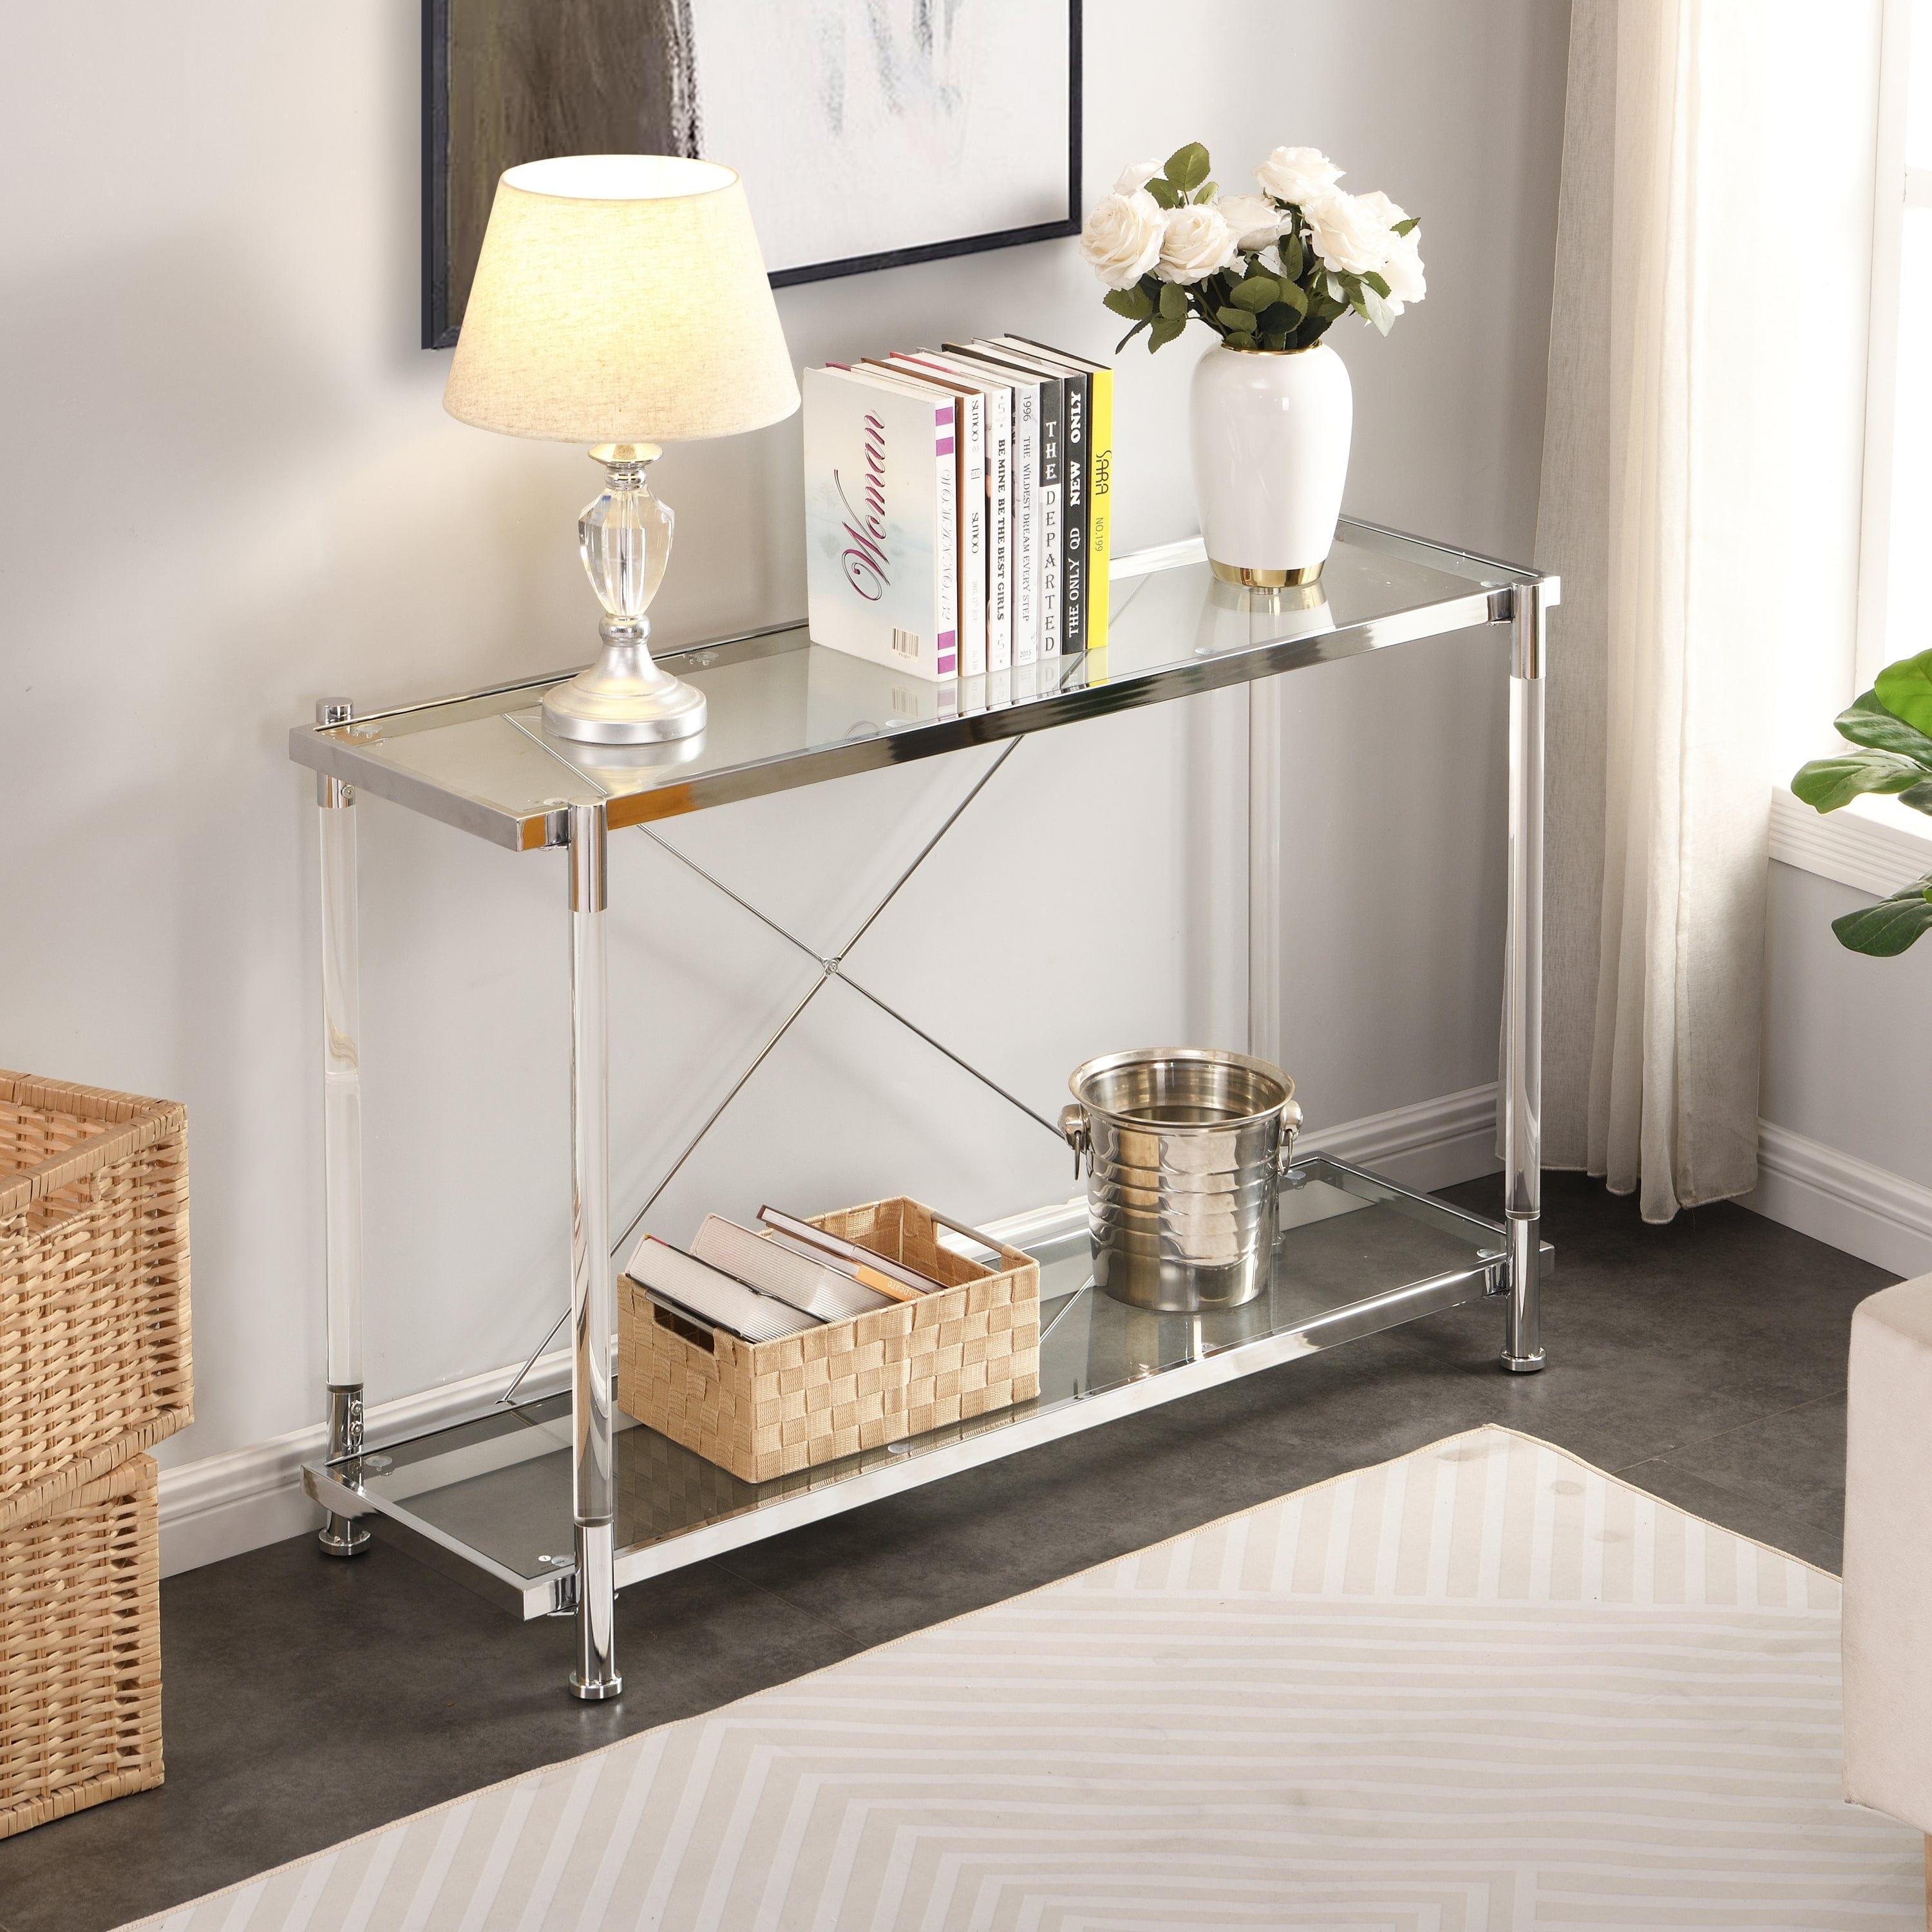 Shop Acrylic Glass Side Table,Chrome Sofa Table,  Console Table for Living Room& Bedroom Mademoiselle Home Decor